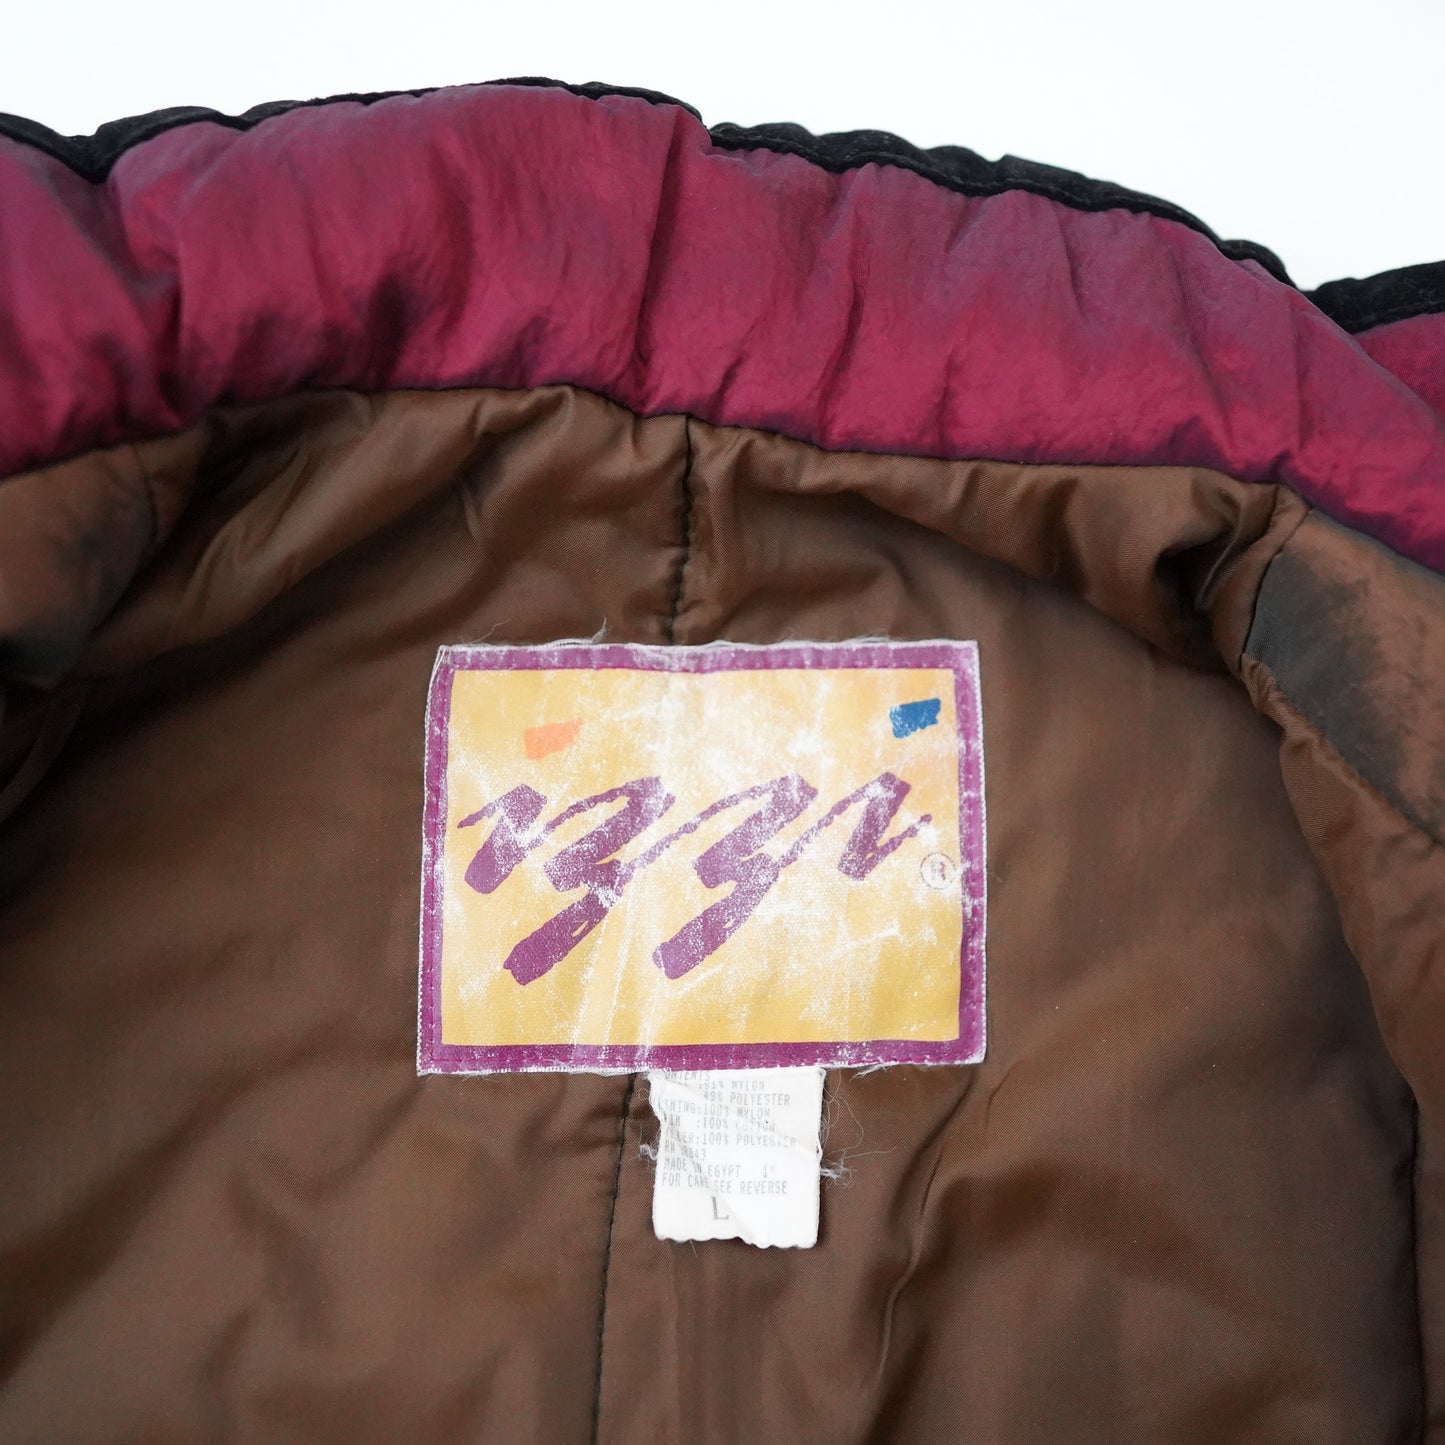 design nylon jacket